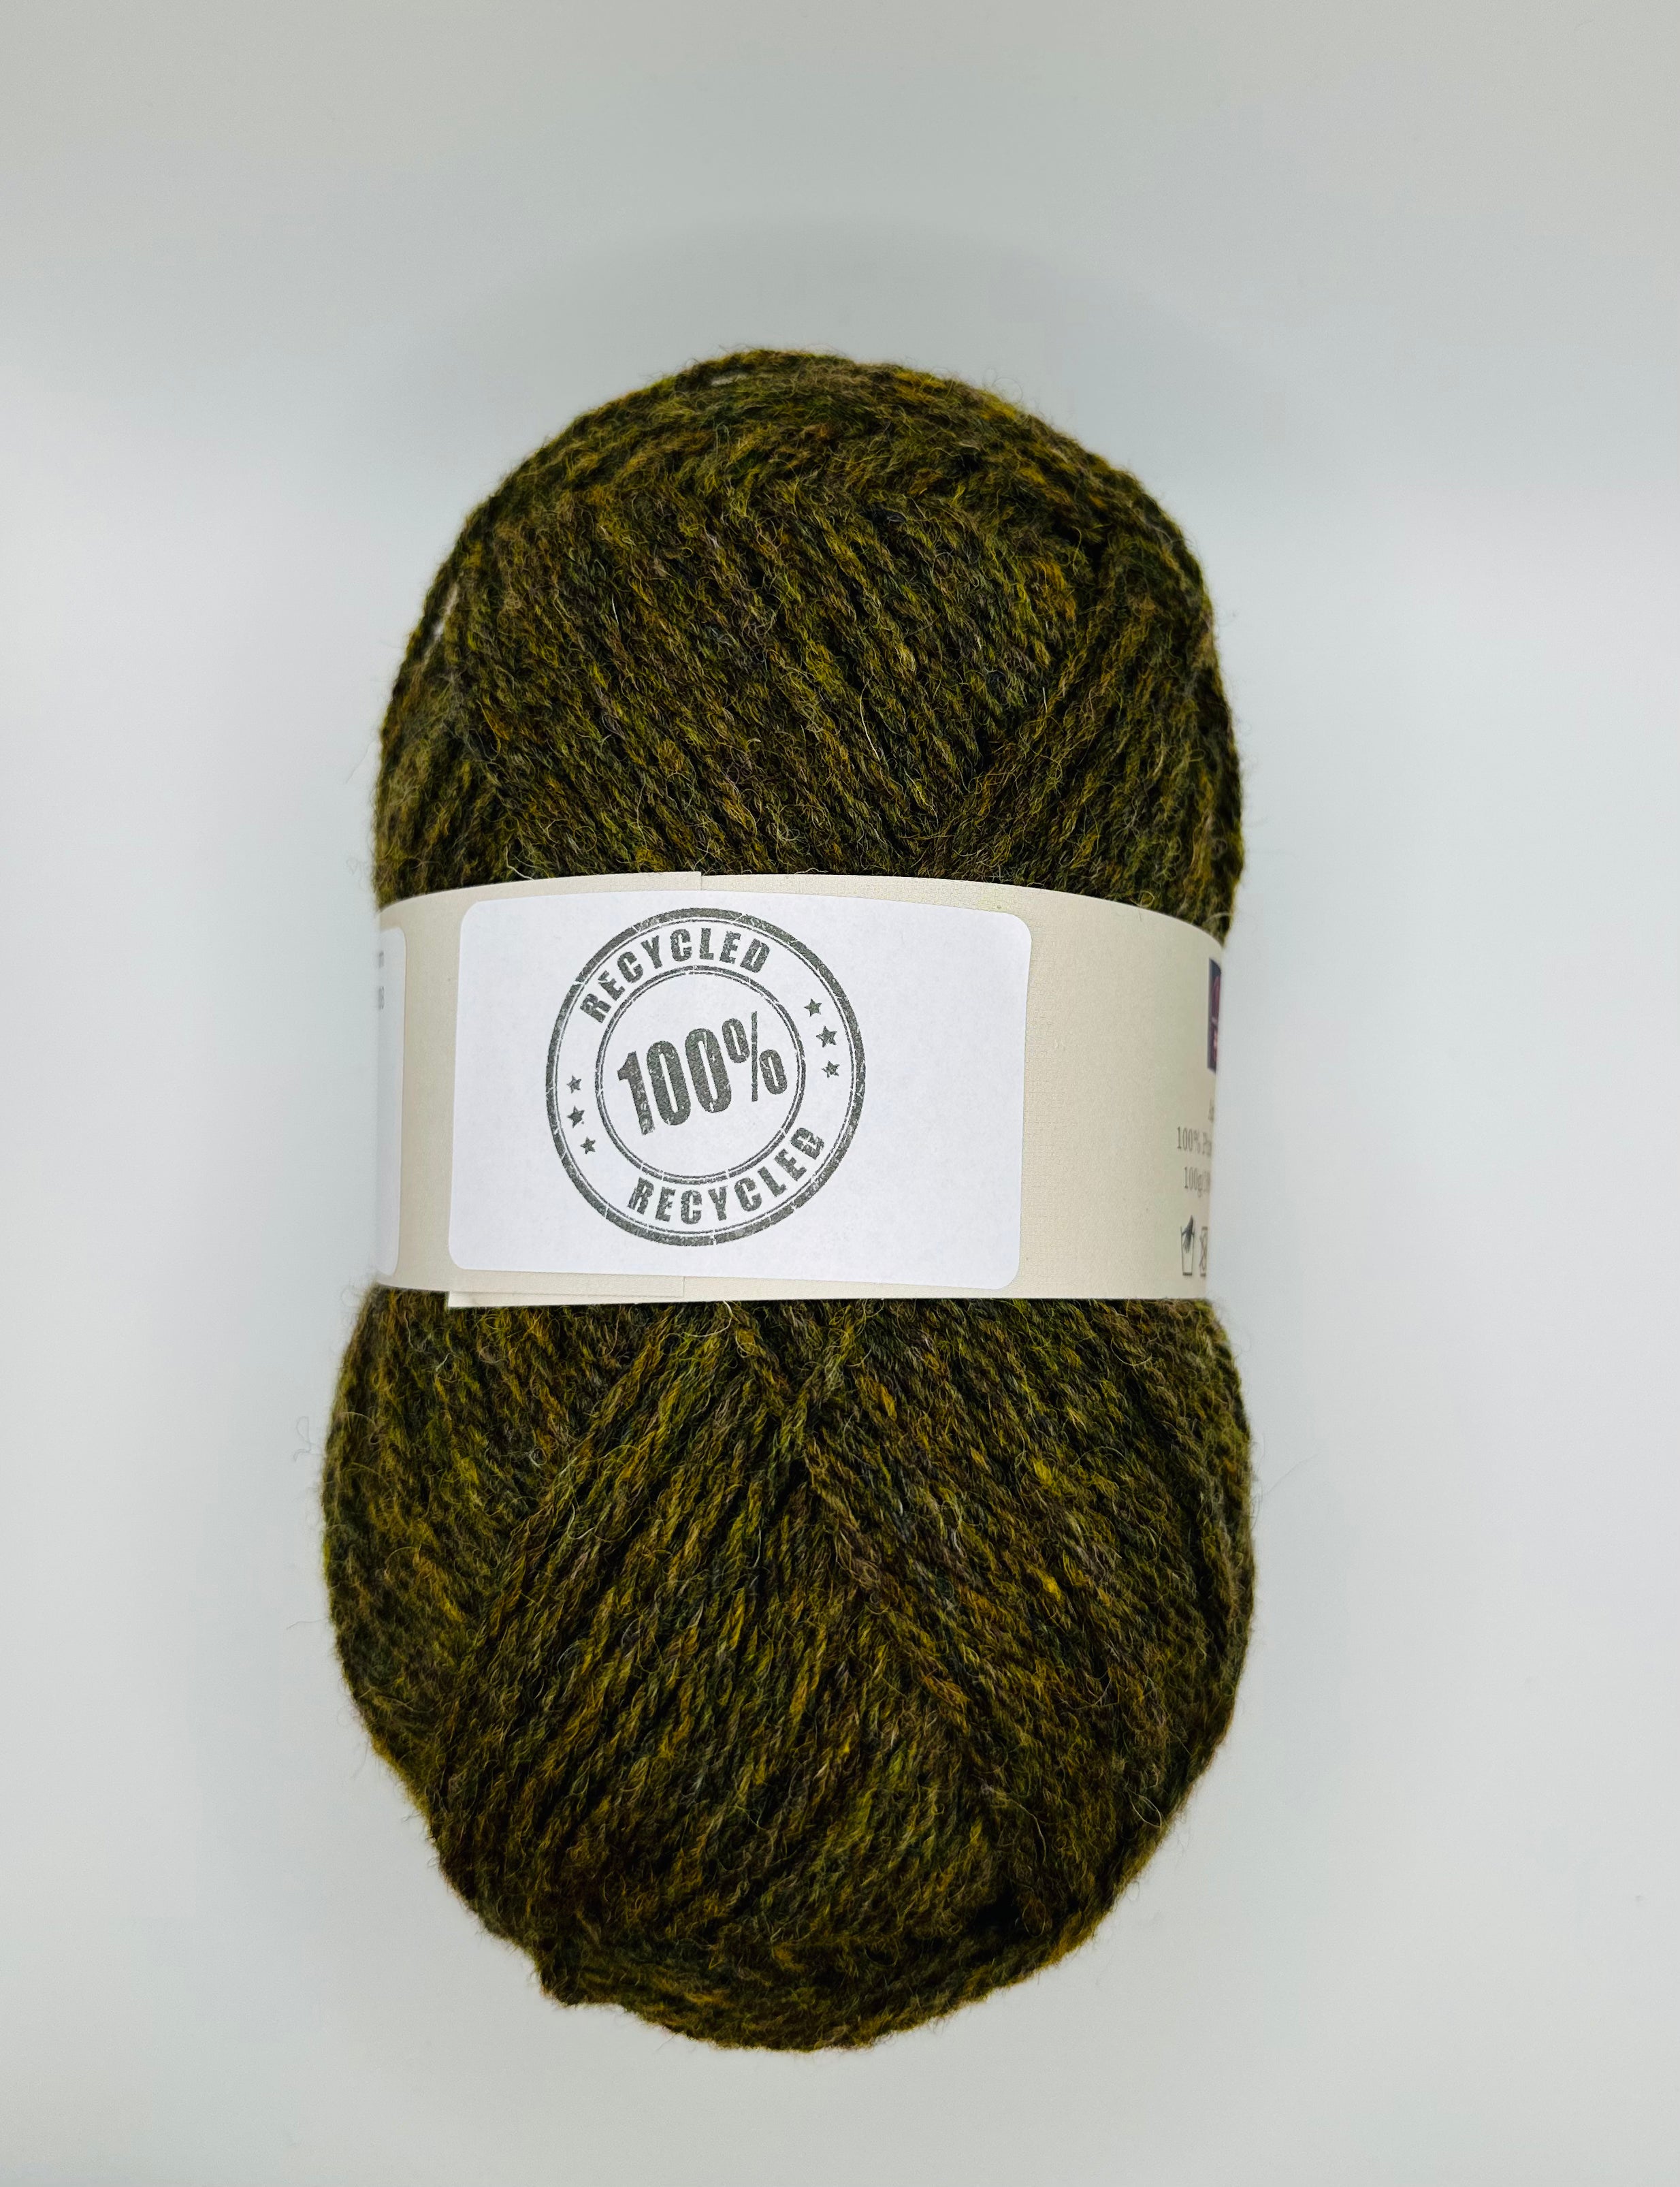 Moss Aran Yarn - Recycled